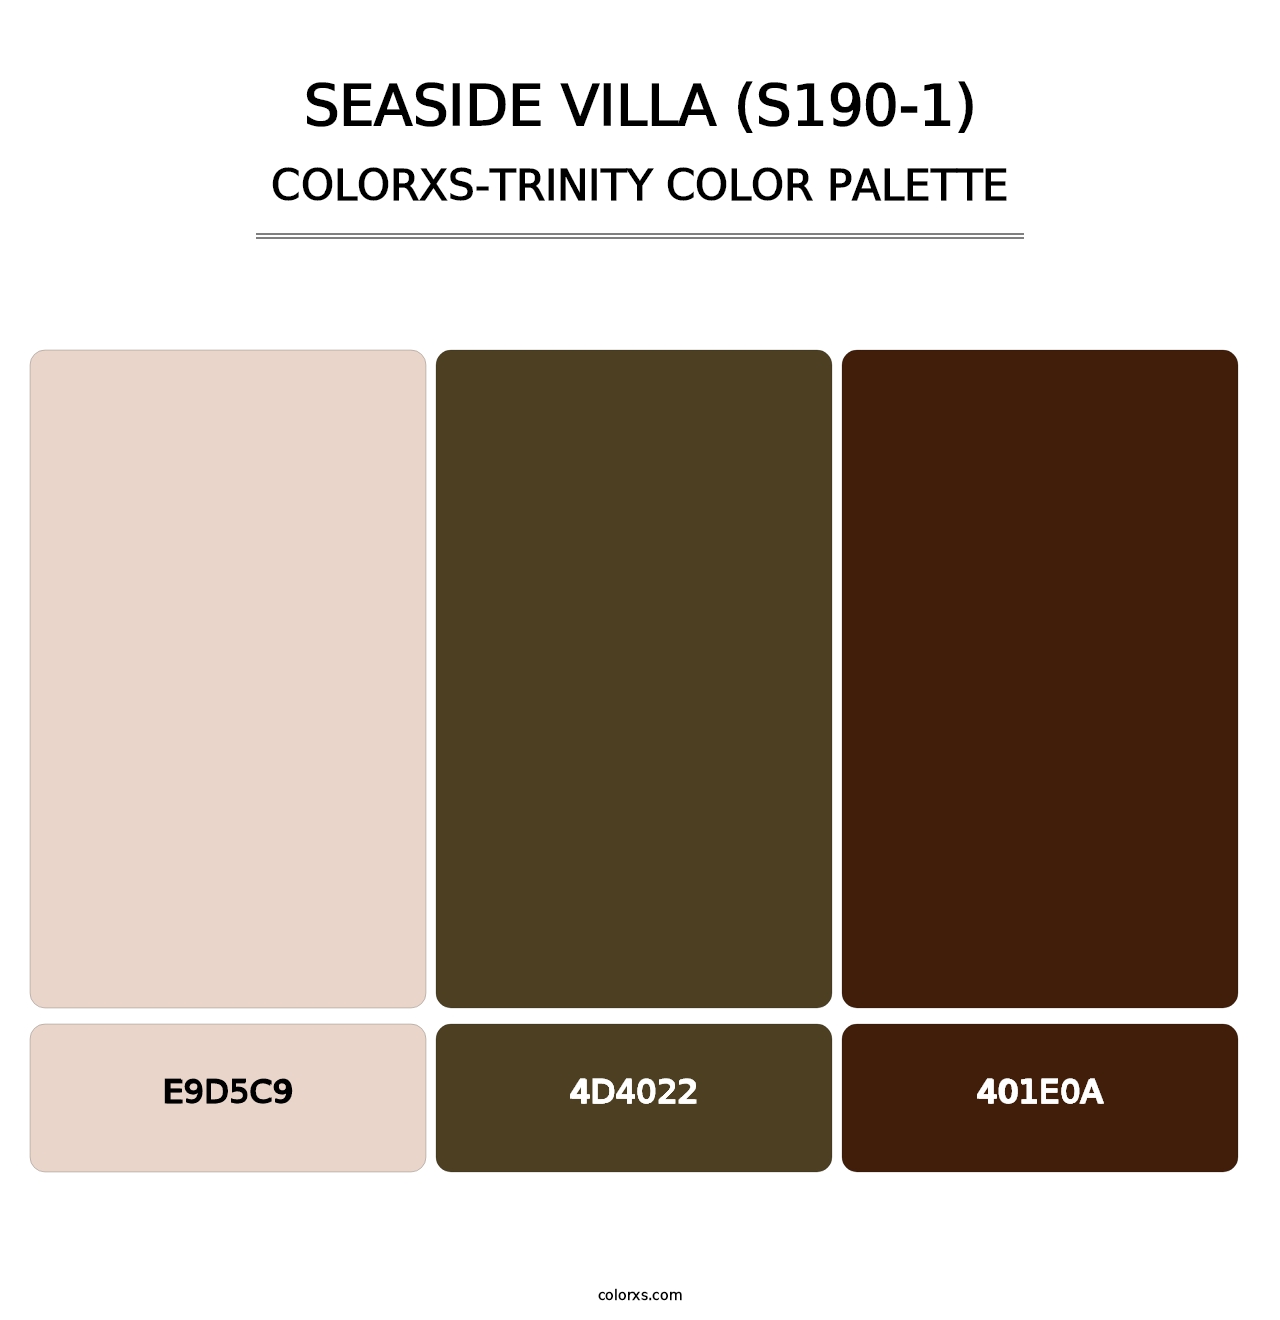 Seaside Villa (S190-1) - Colorxs Trinity Palette